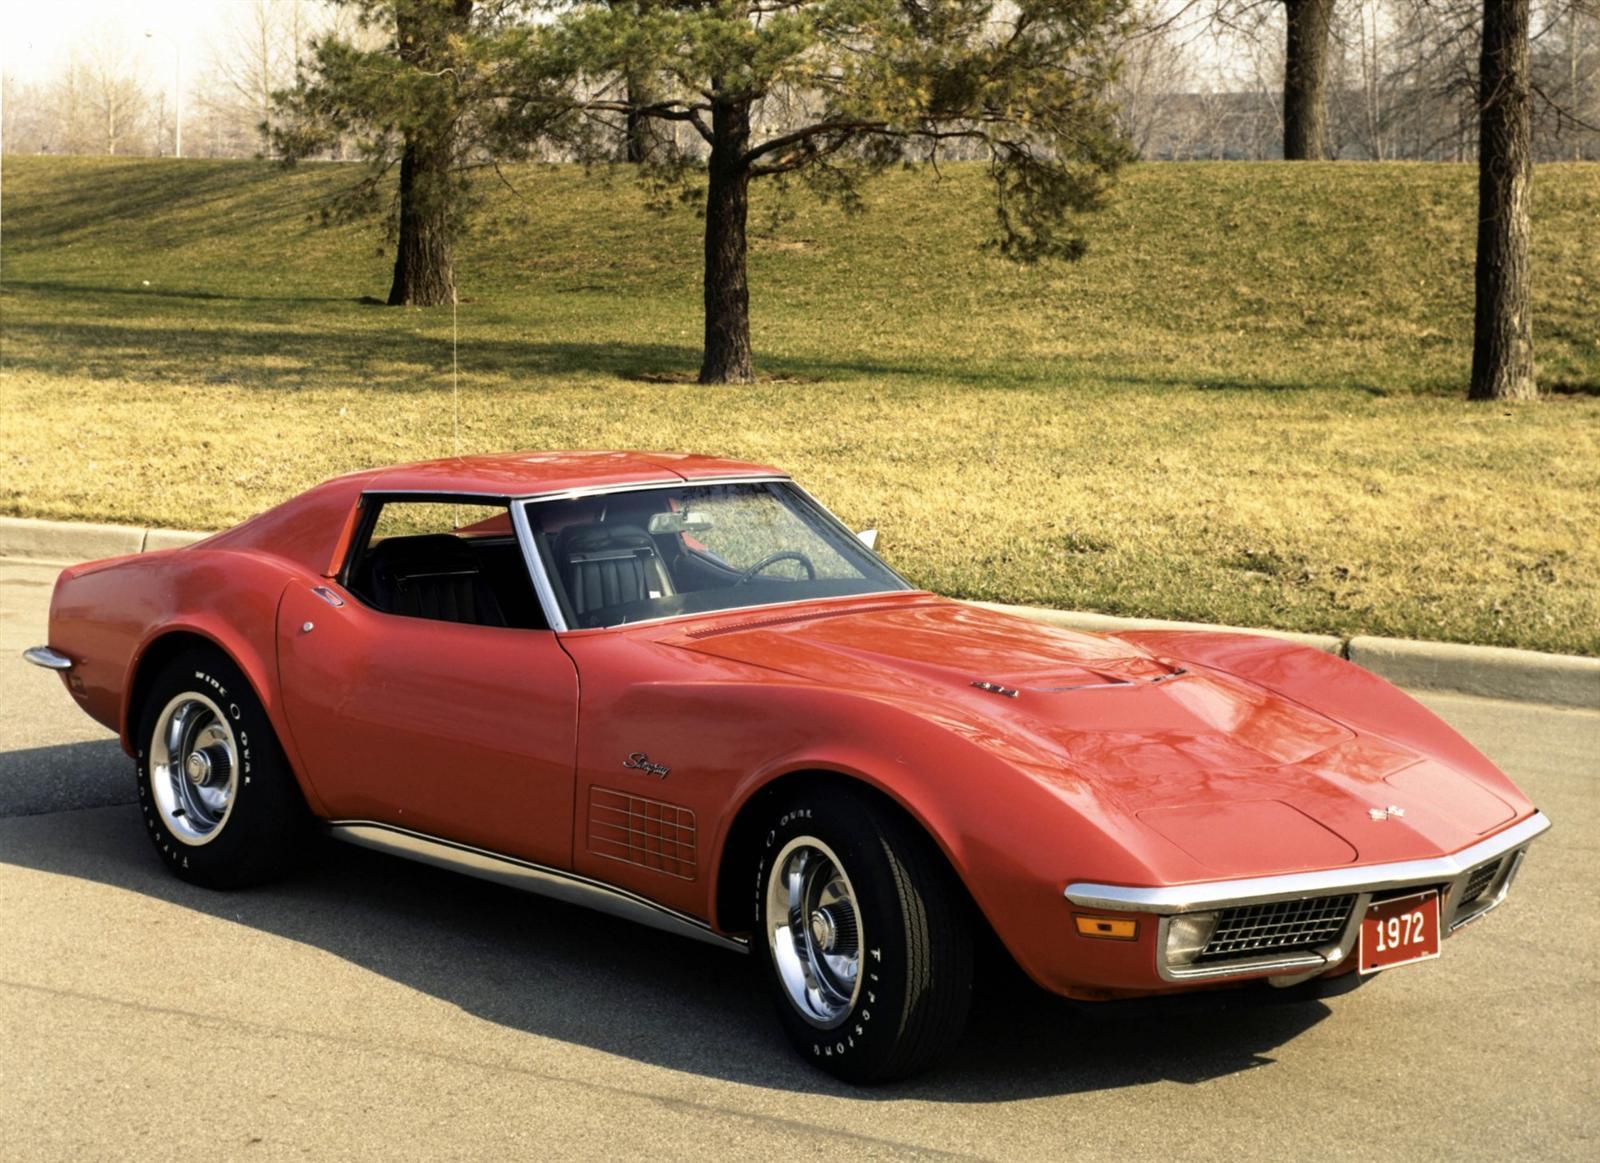 Dupa 1971, normele SAE de masurare a puterii s-au modificat, iar Corvette scotea maxim 255 CP